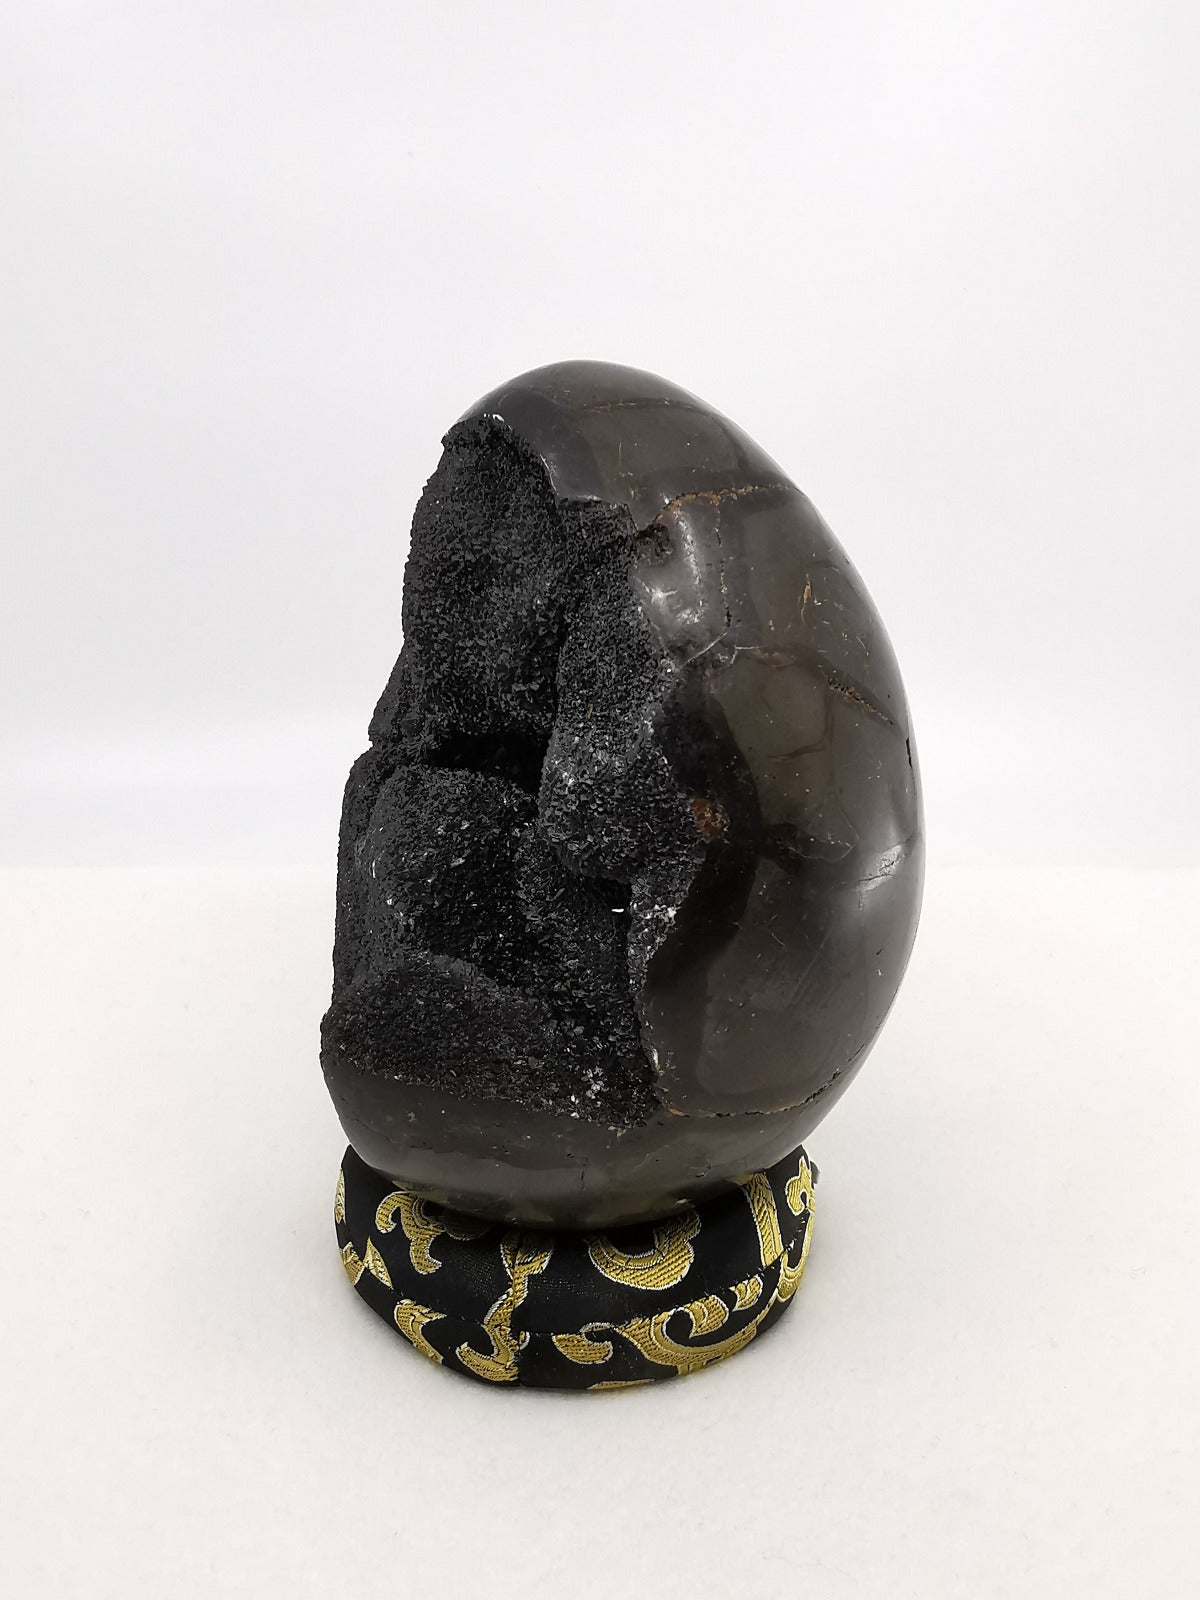 Septarian Geode Stone 3